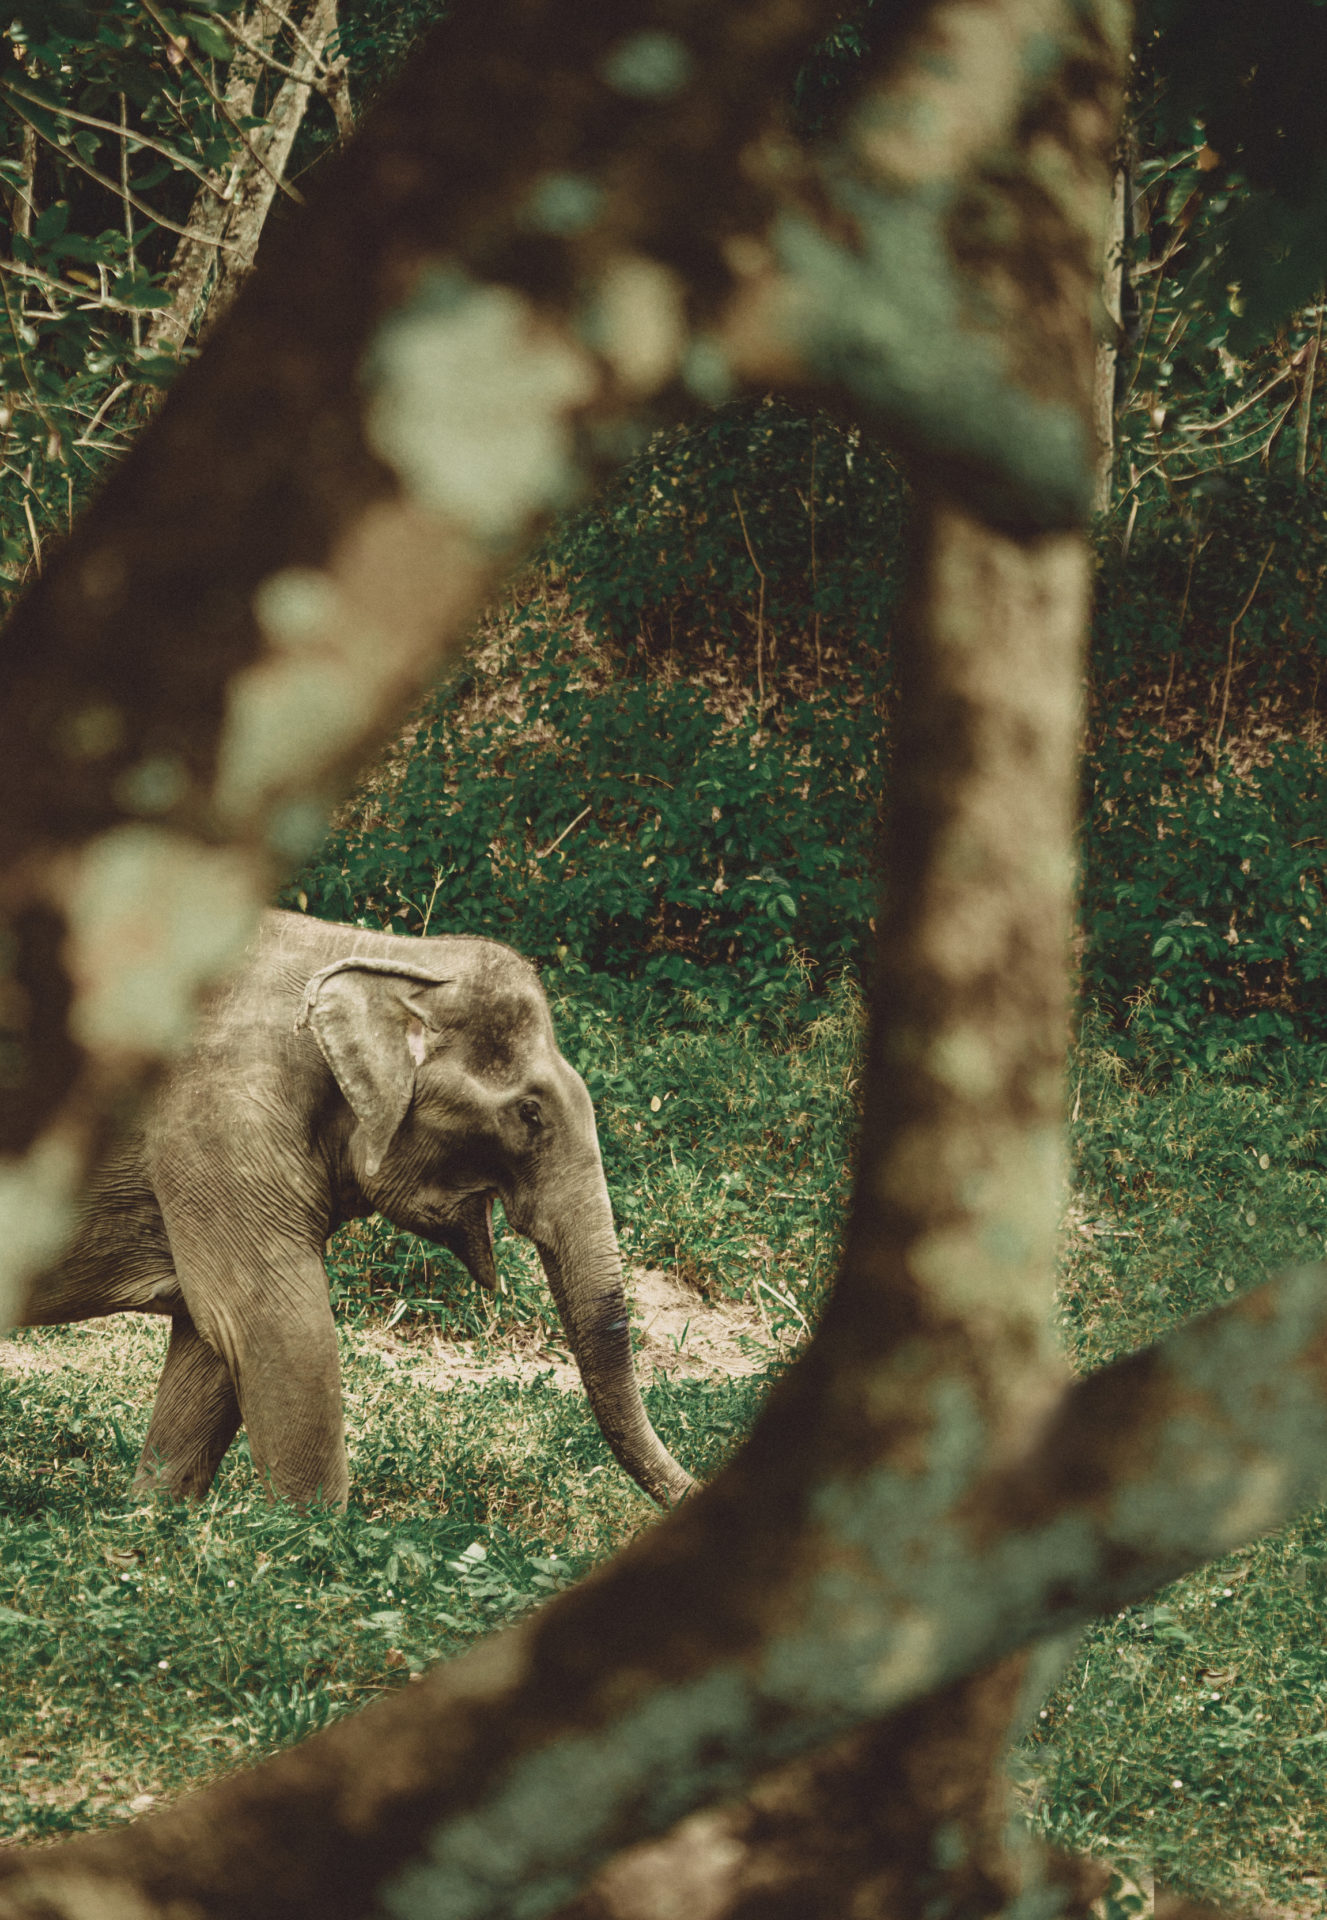 An elephant roaming around the Phuket Elephant Sanctuary (Photo by David Terrazas)